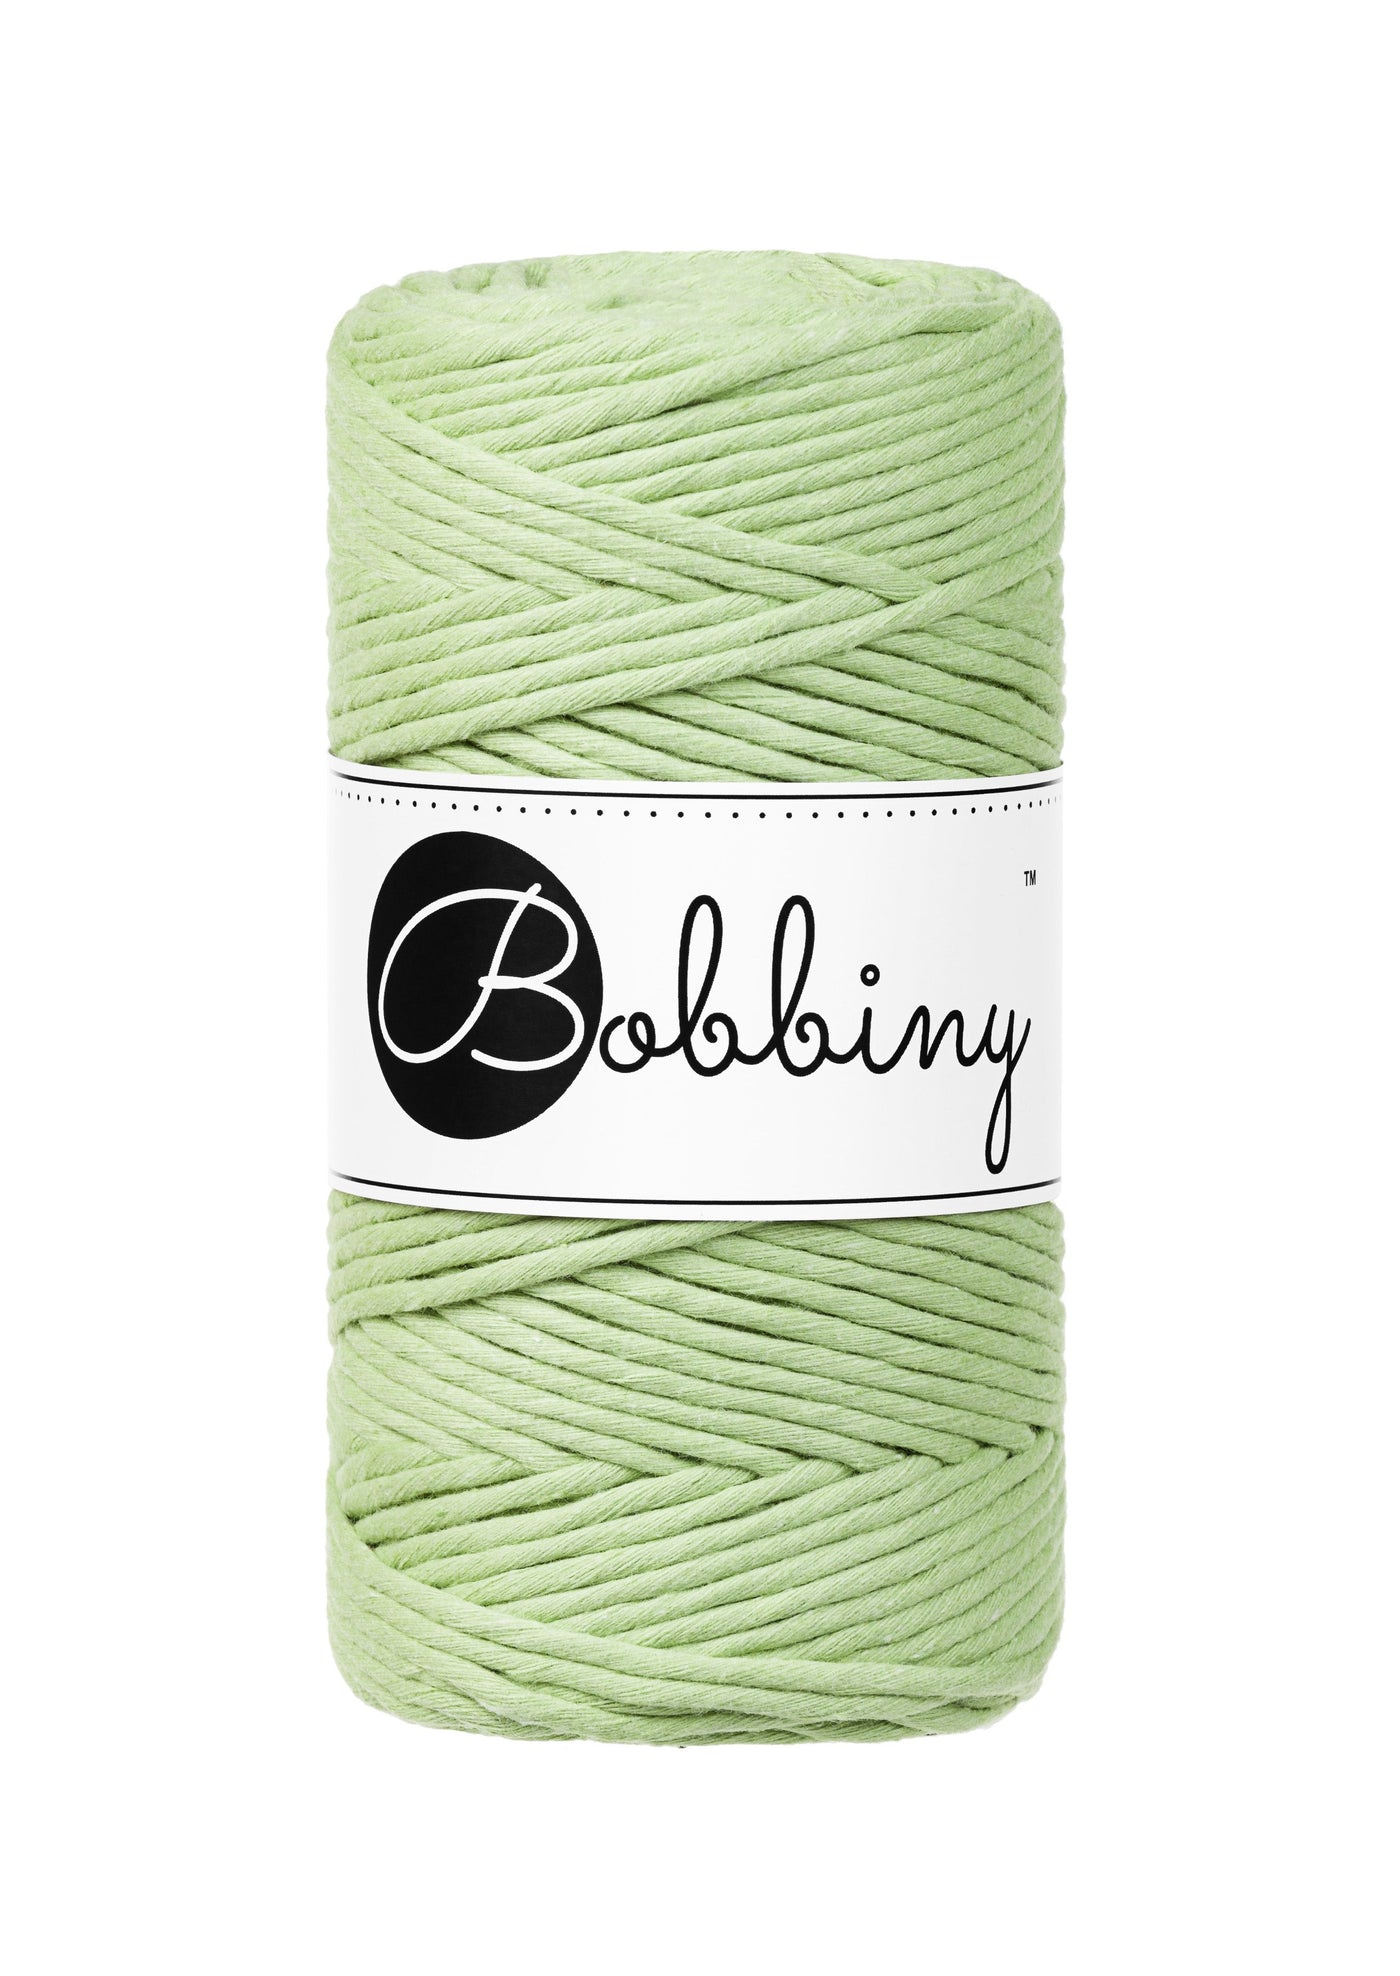 Bobbiny single twist cord 3mm in green matcha shade 